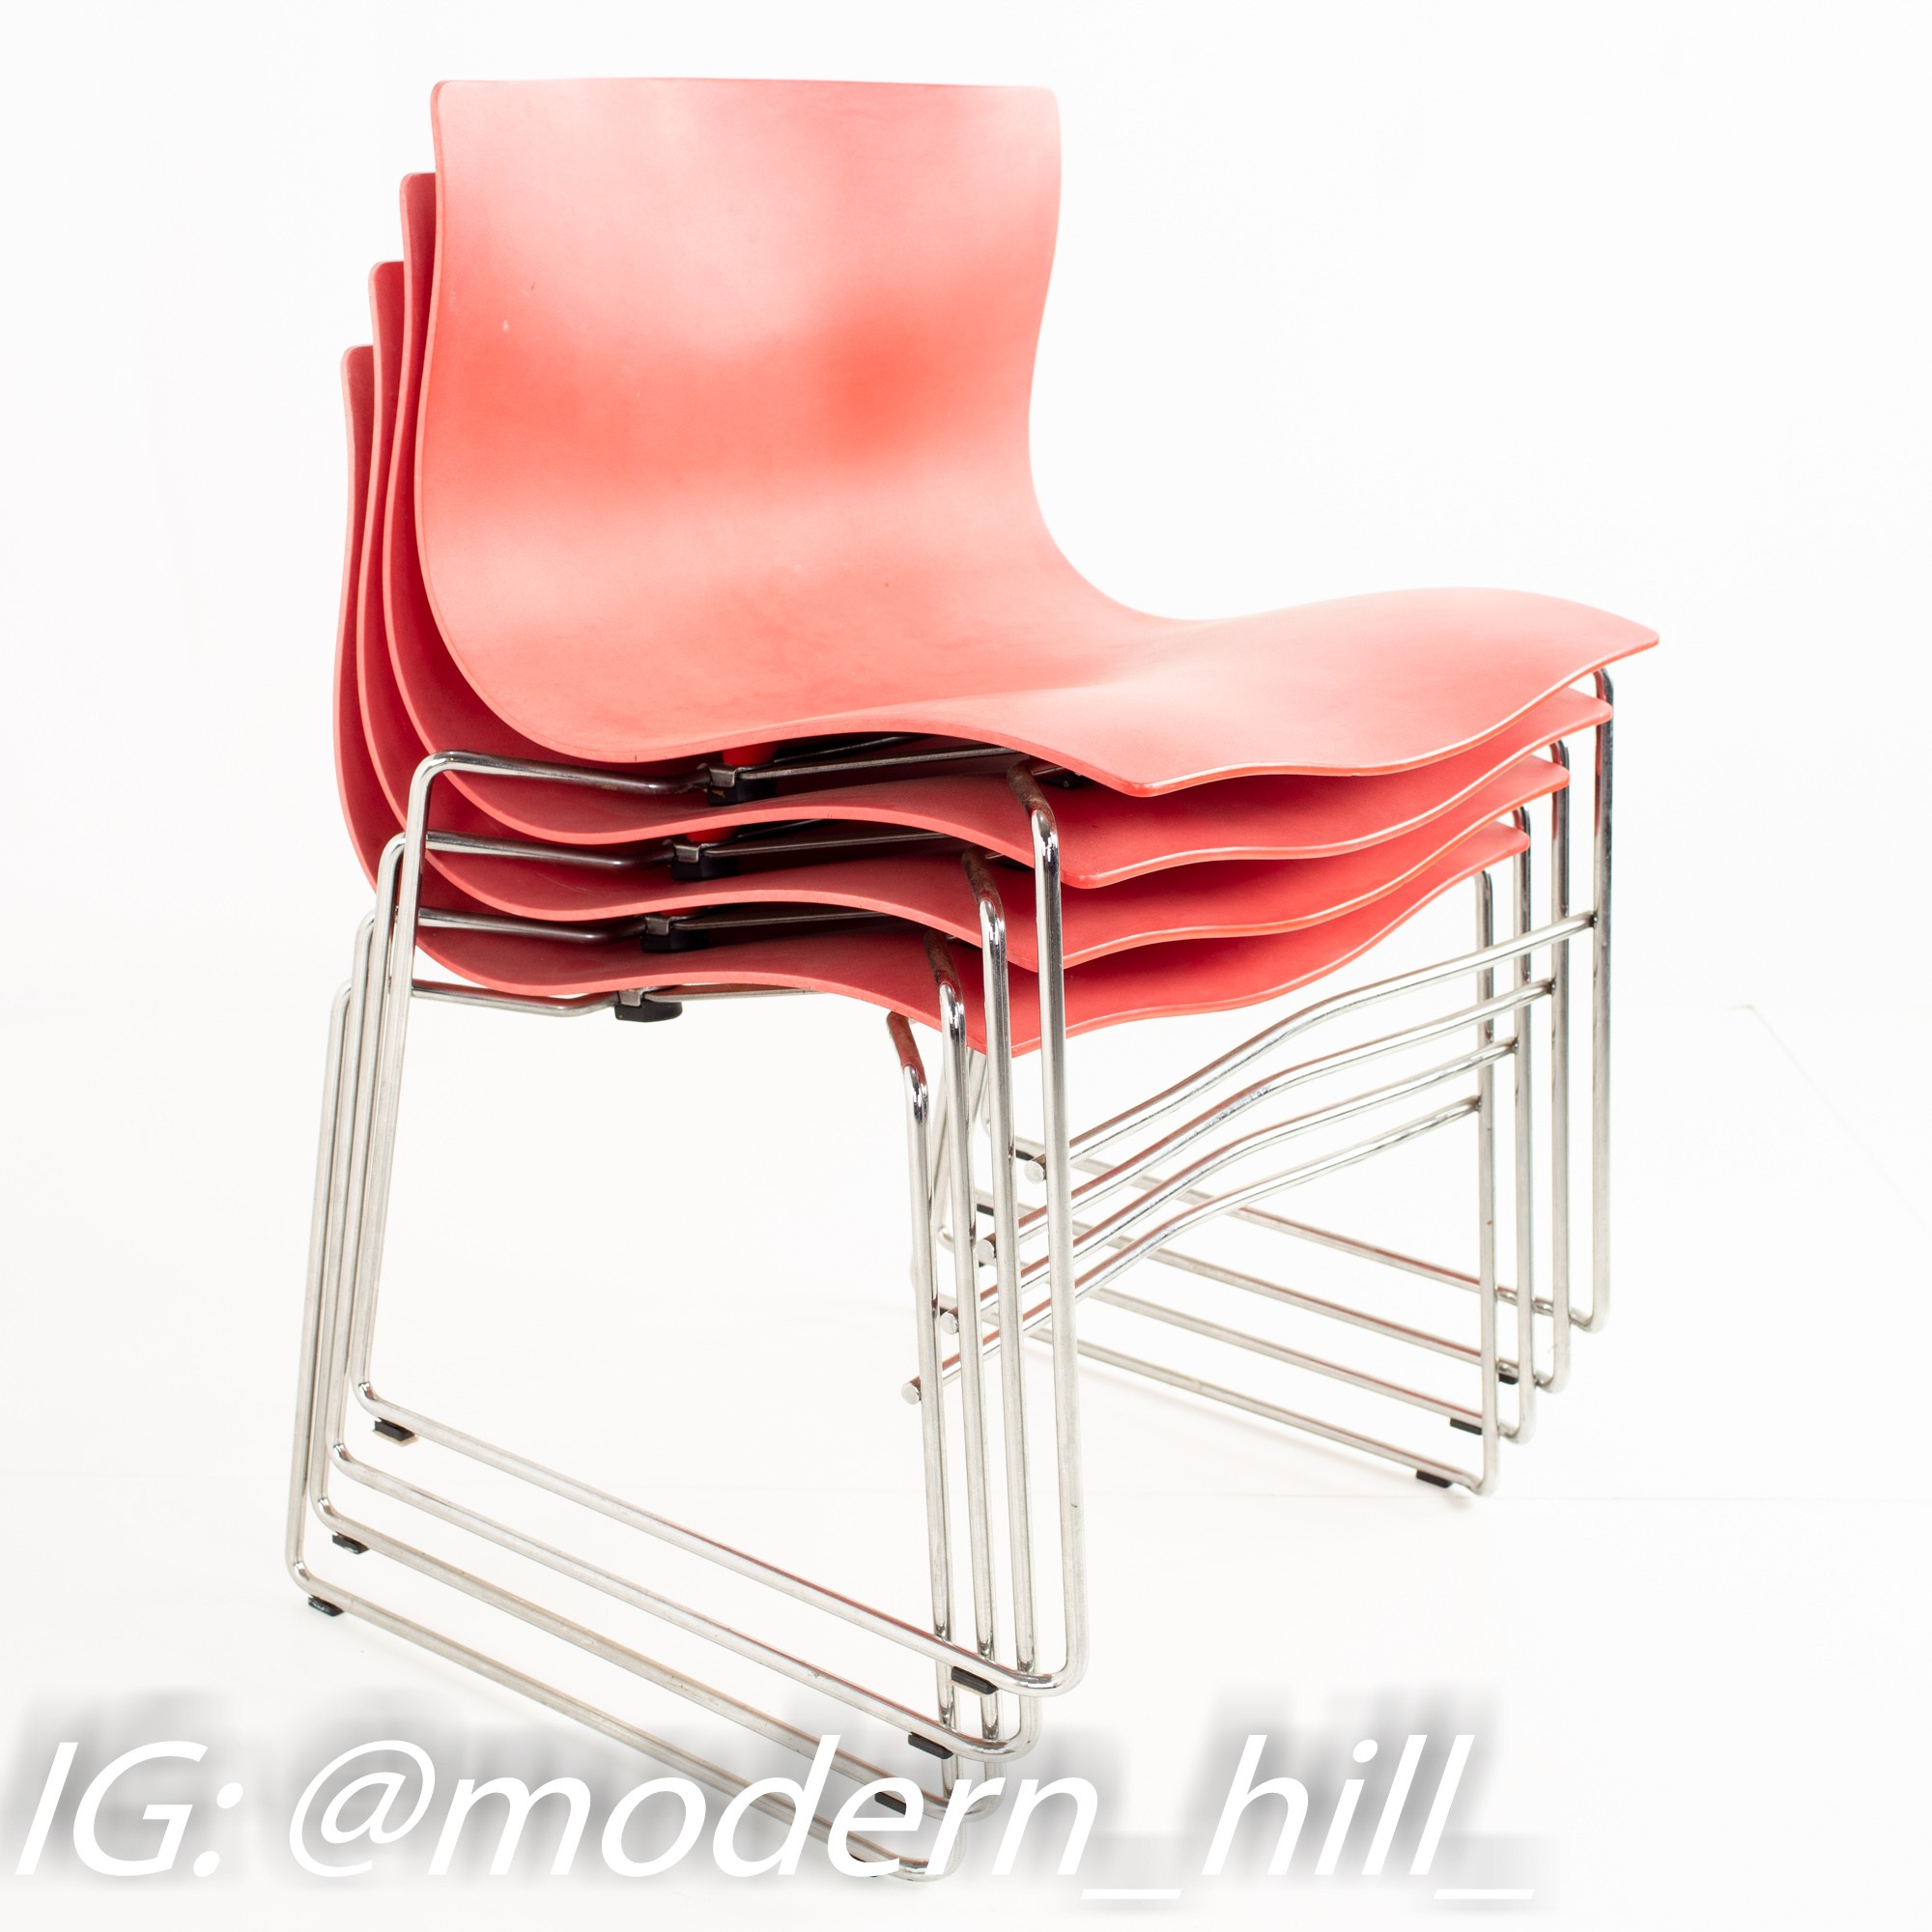 Massimo Vignelli for Knoll International Mid Century Handkerchief Chairs - Set of 4